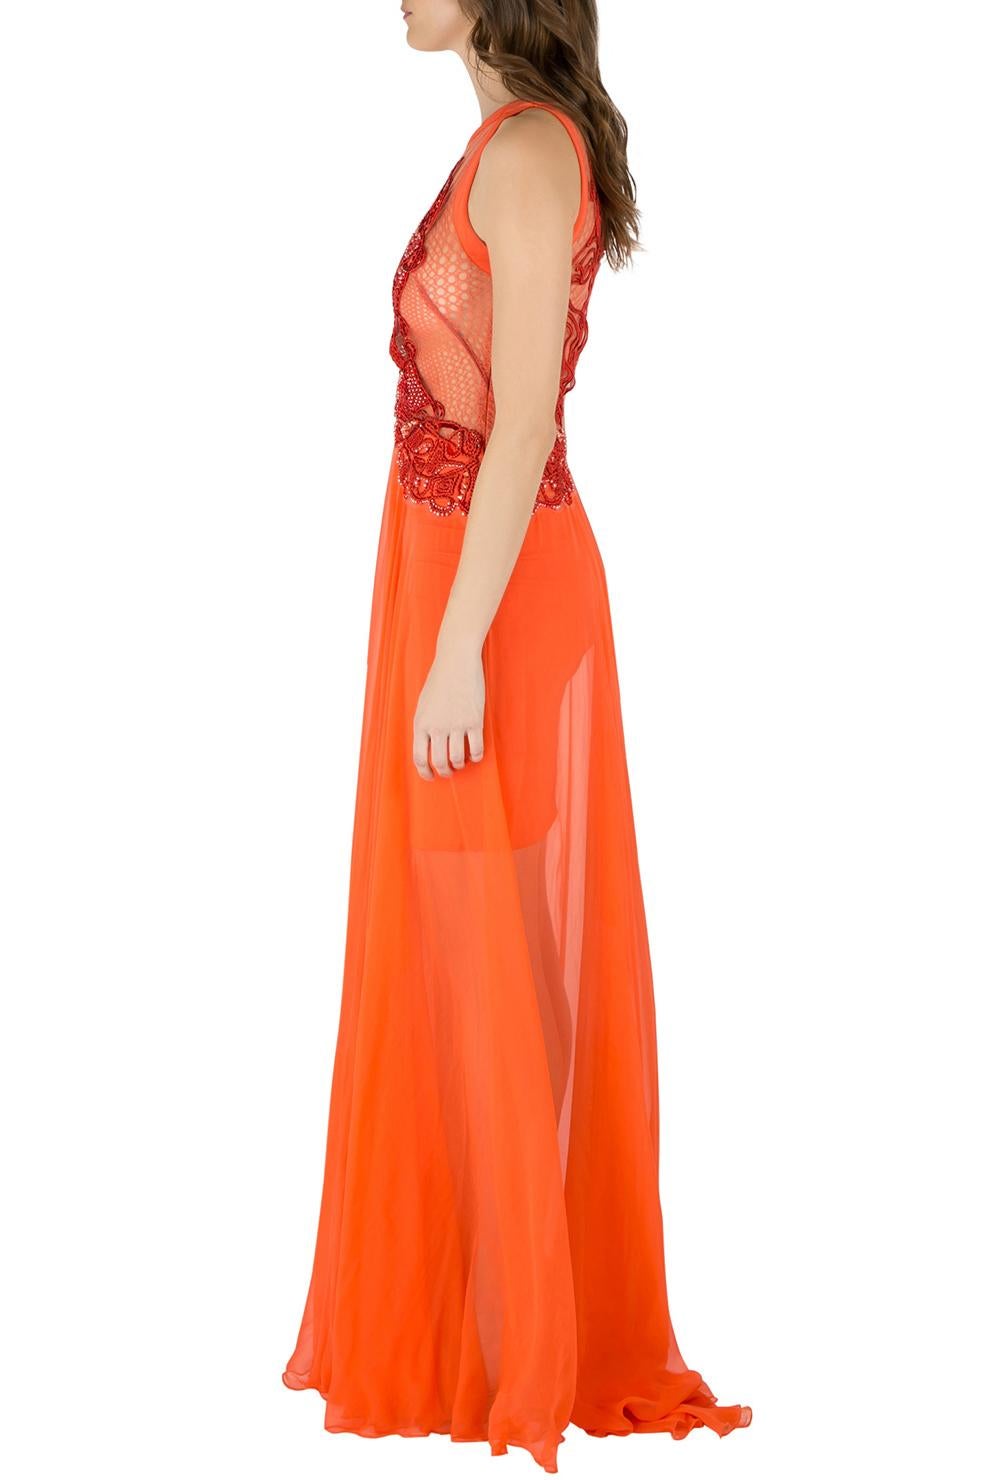 zuhair murad orange dress